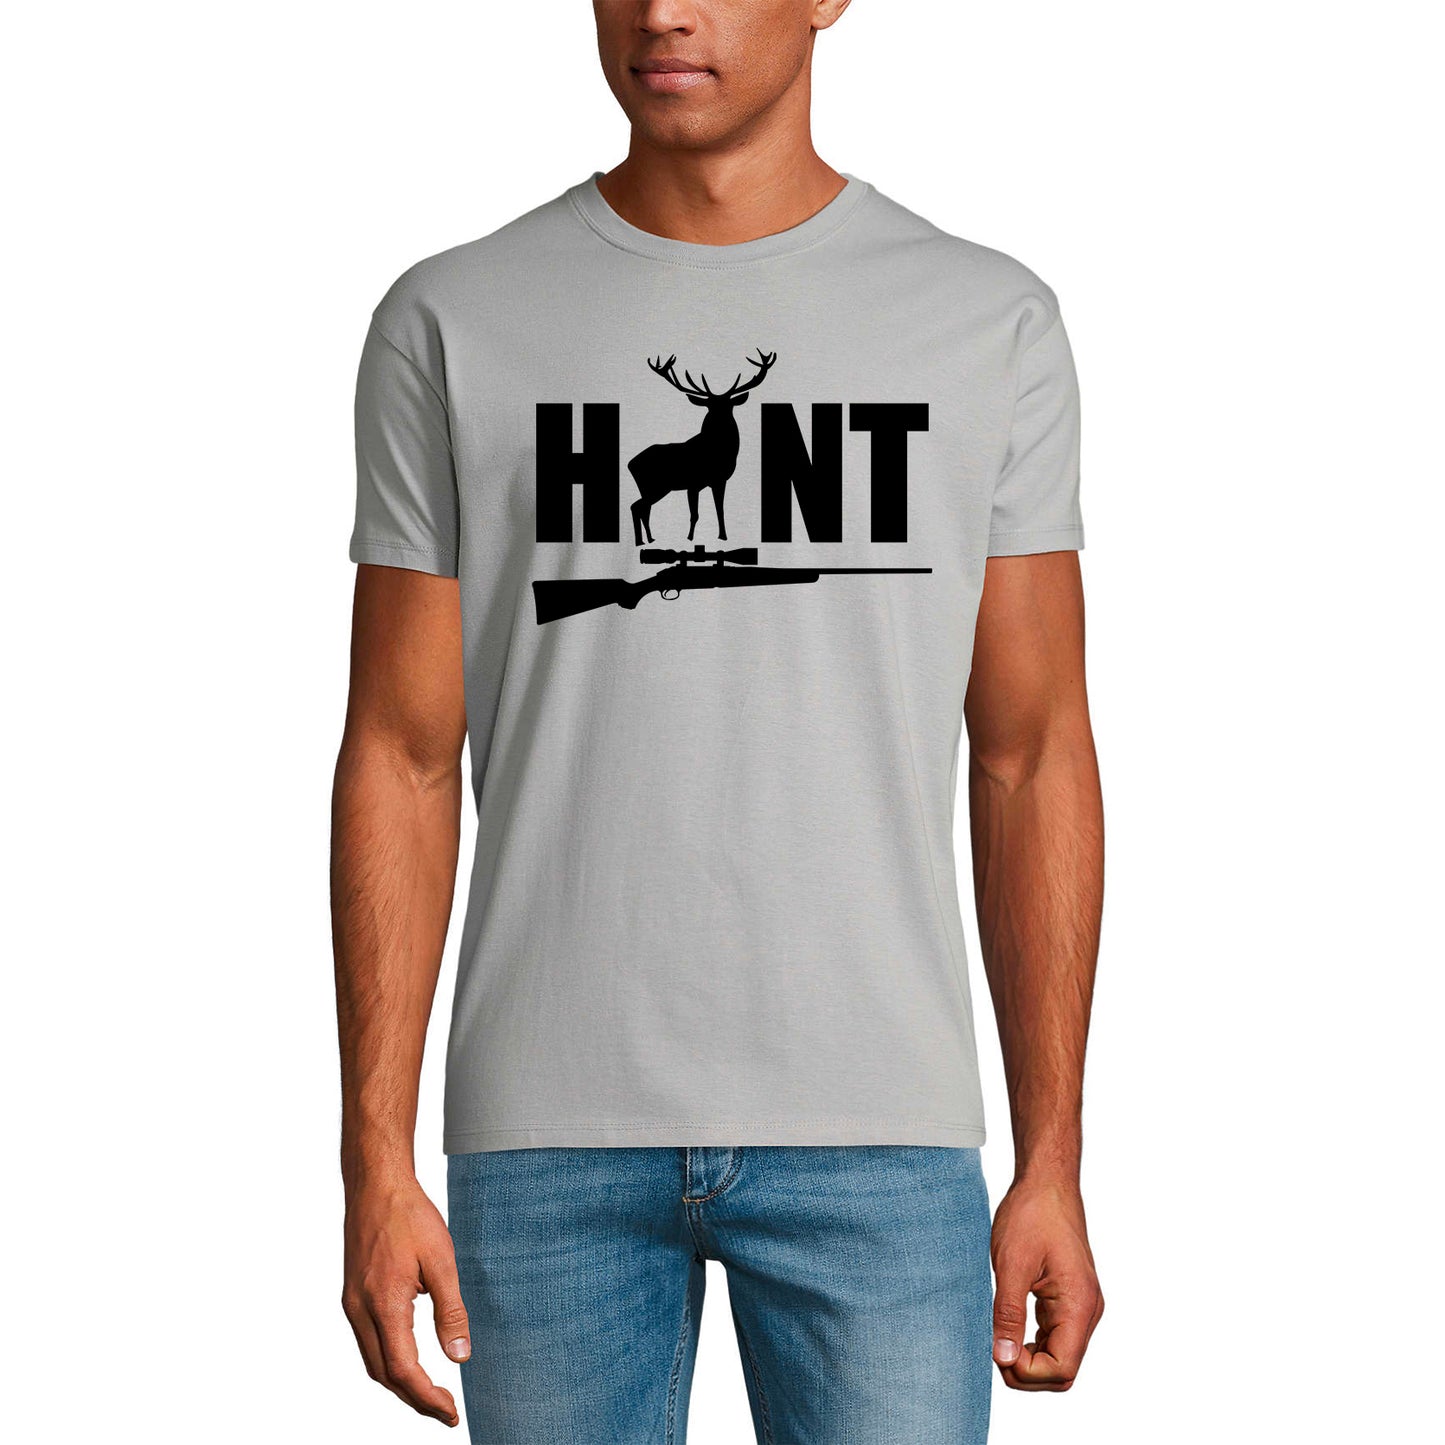 ULTRABASIC Men's T-Shirt Hunt Rifle Deer - Funny Hunting Tee Shirt